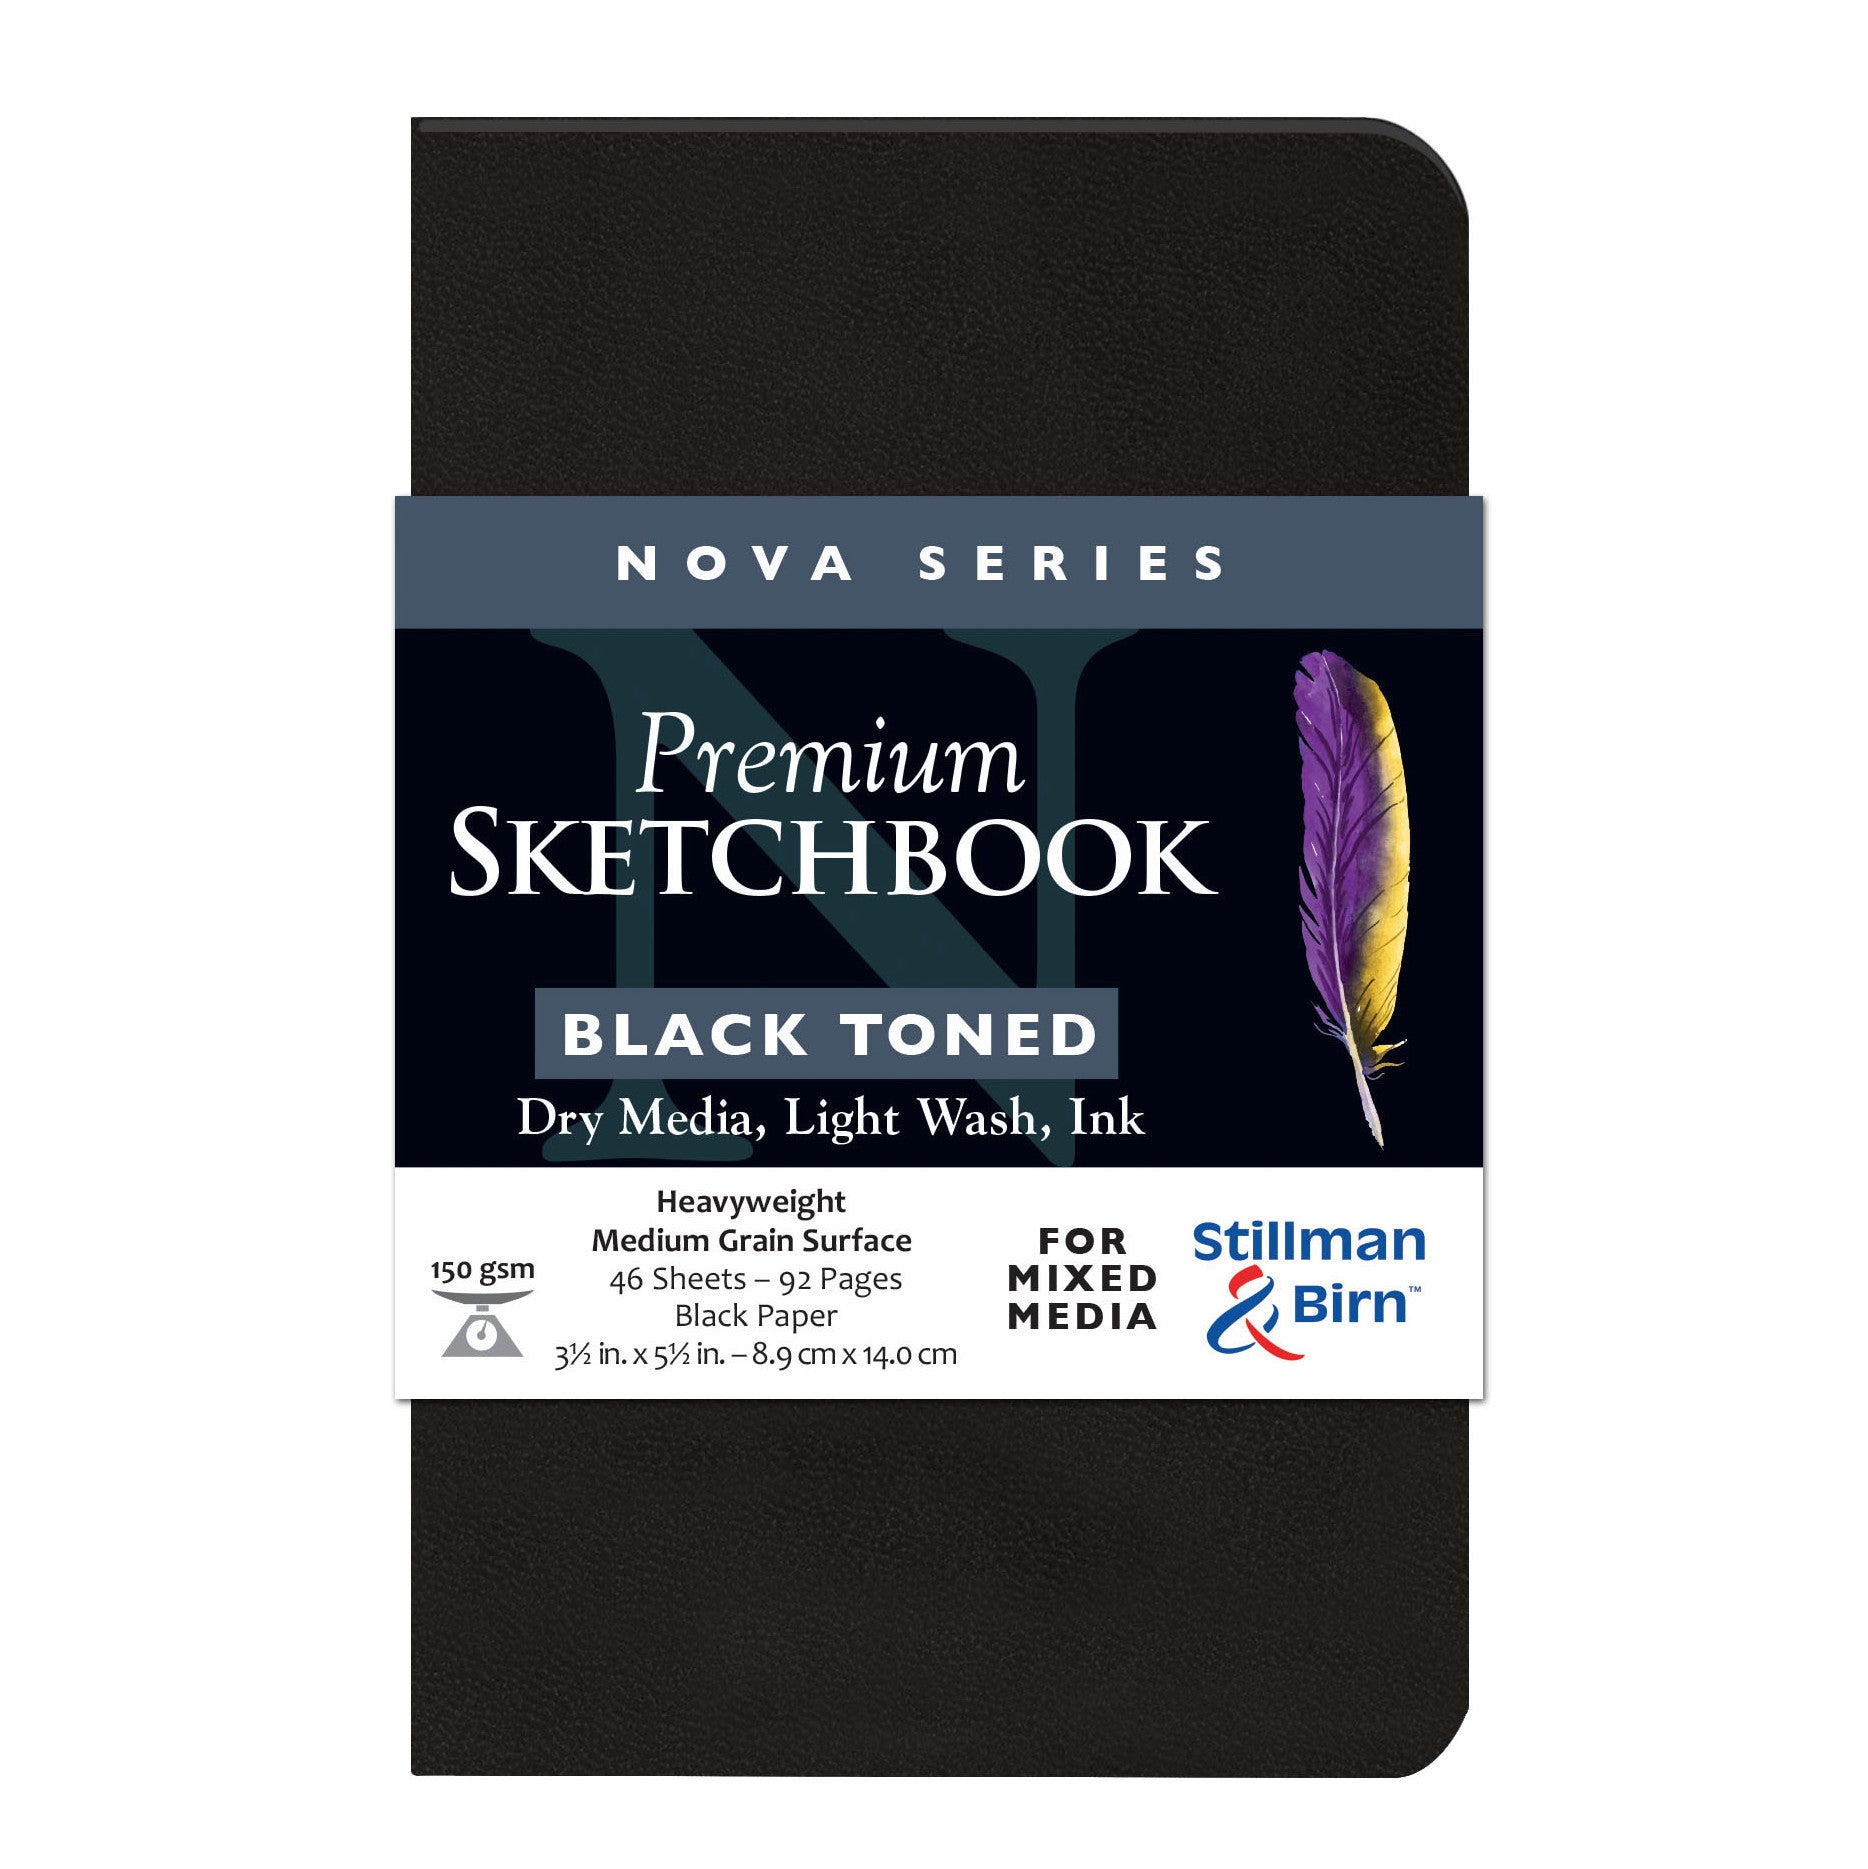 Nova Black Toned Premium Sketchbook by Stillman & Birn